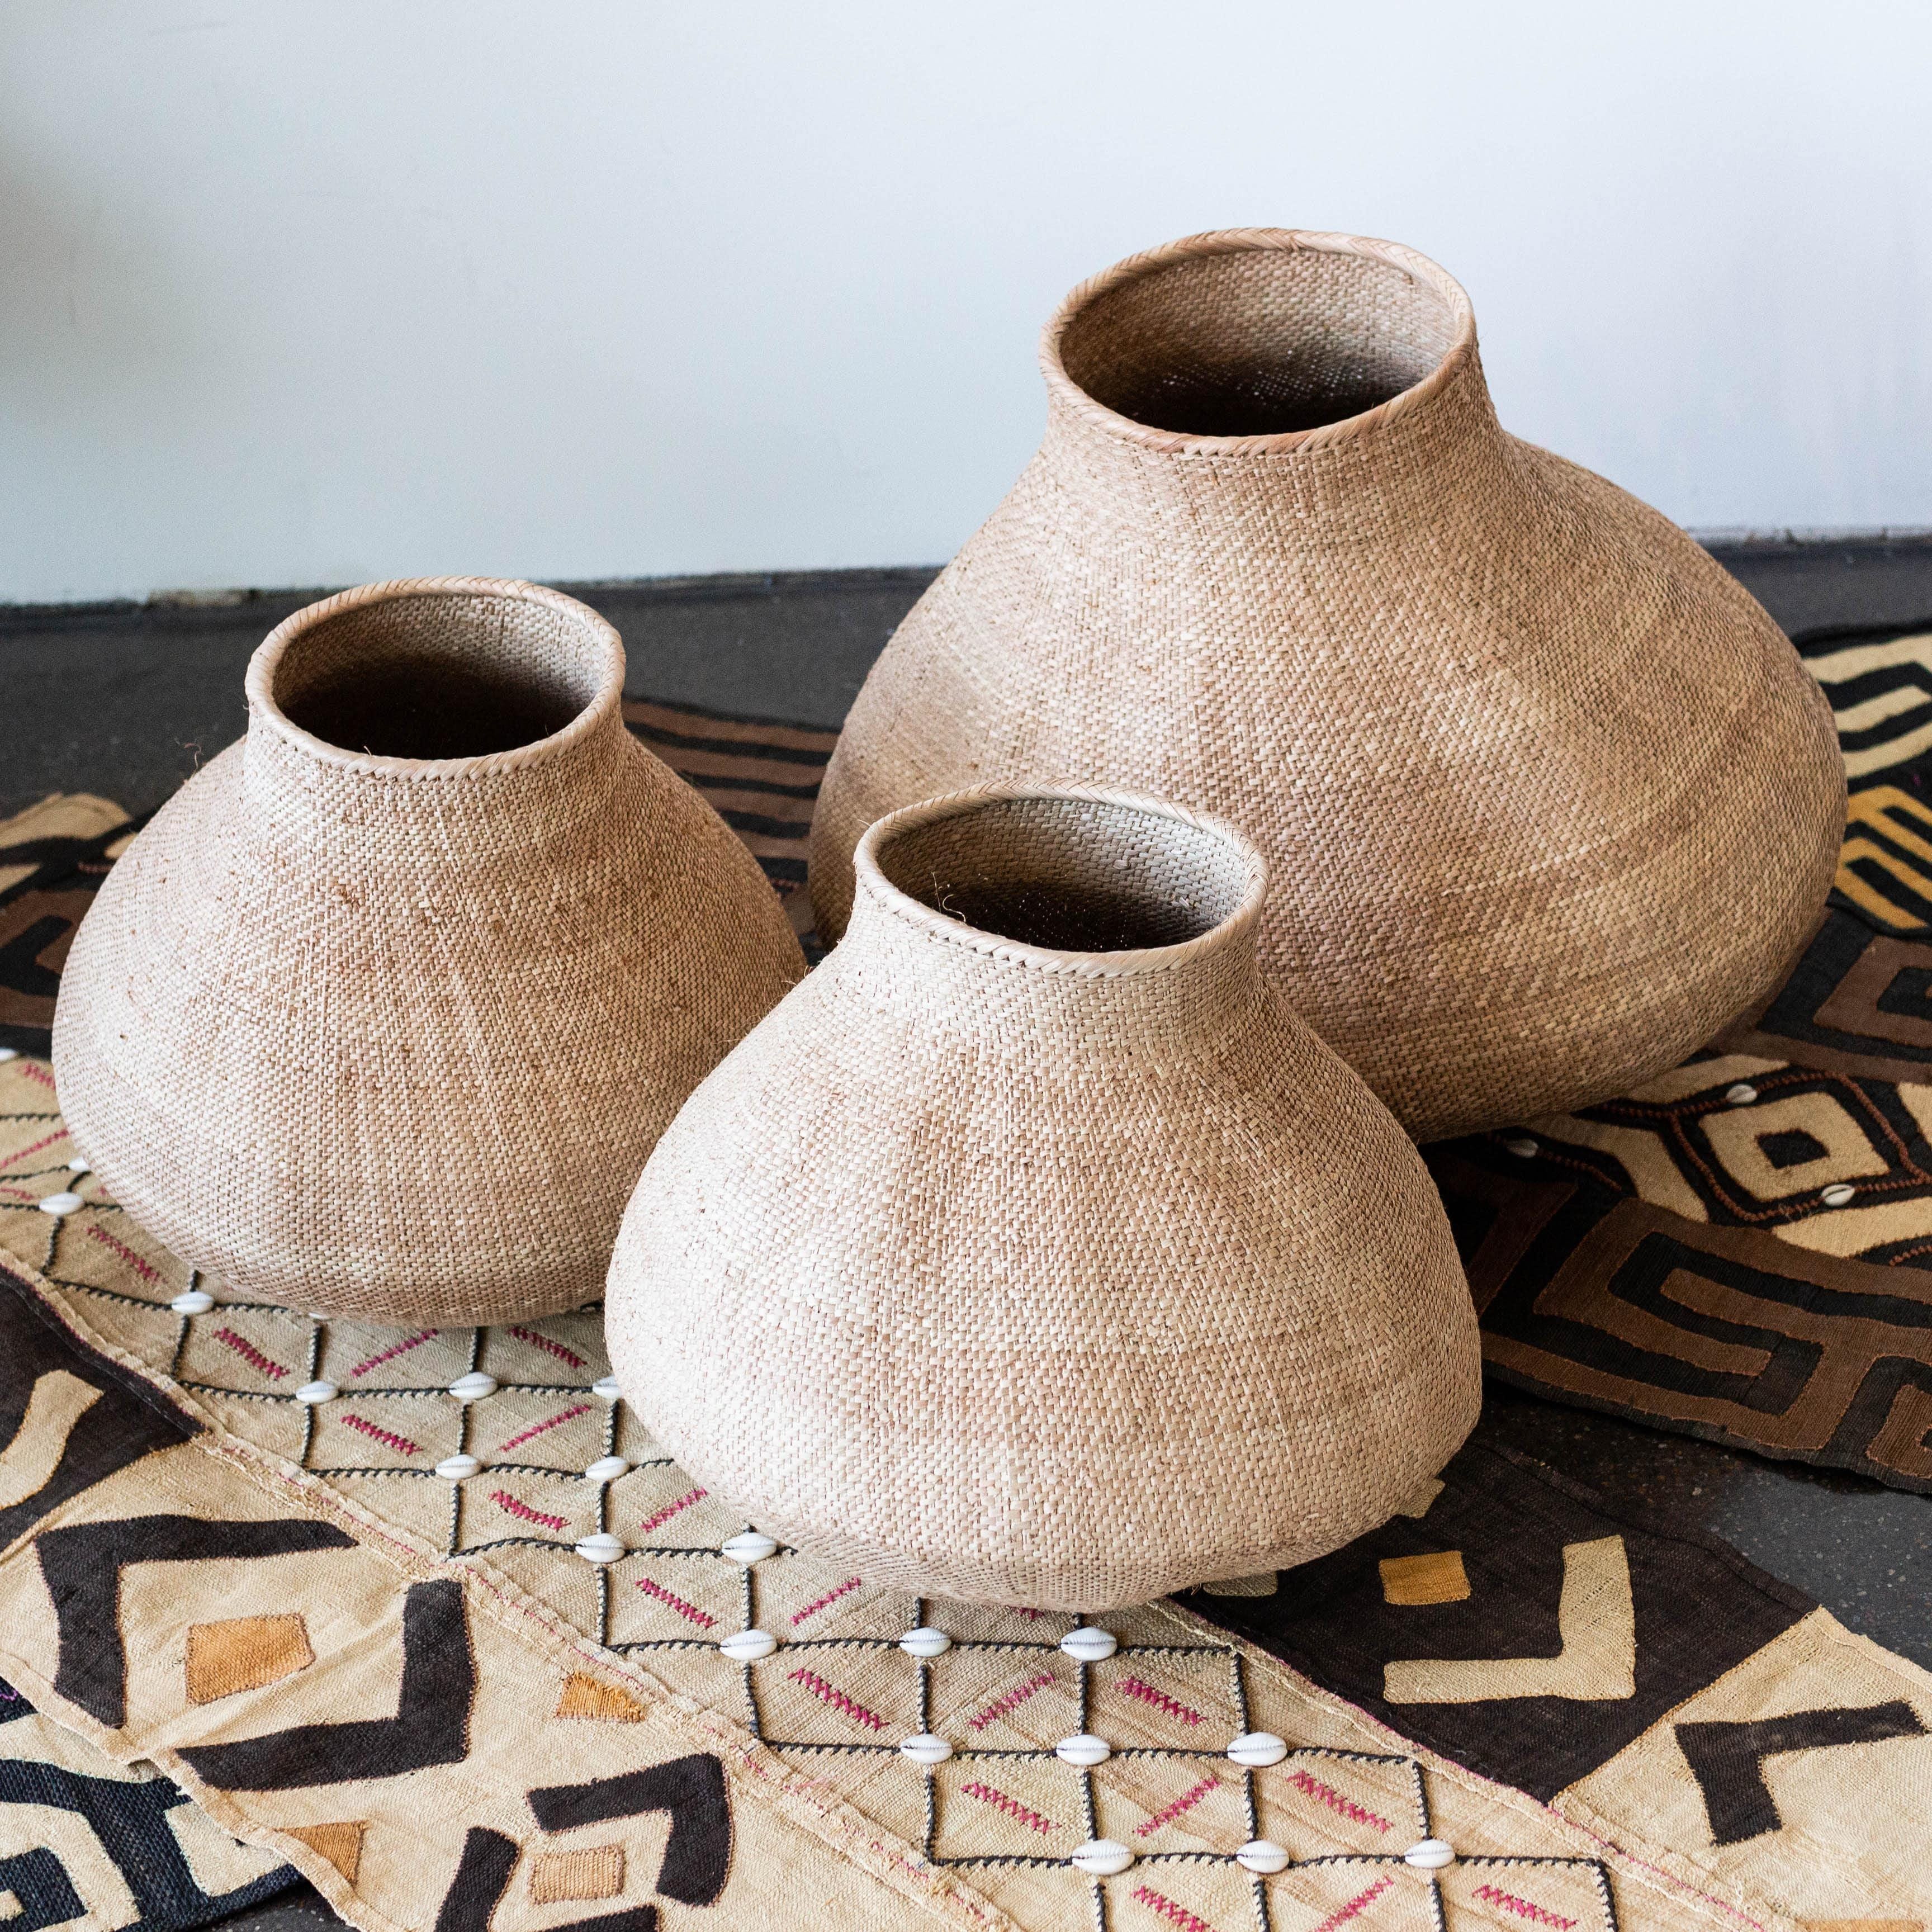 kanju interiors giant nongo basket hand woven grass weave pot shaped organic palm leaves vines traditional simple geometric unique gift decor decorative planter vessel storage